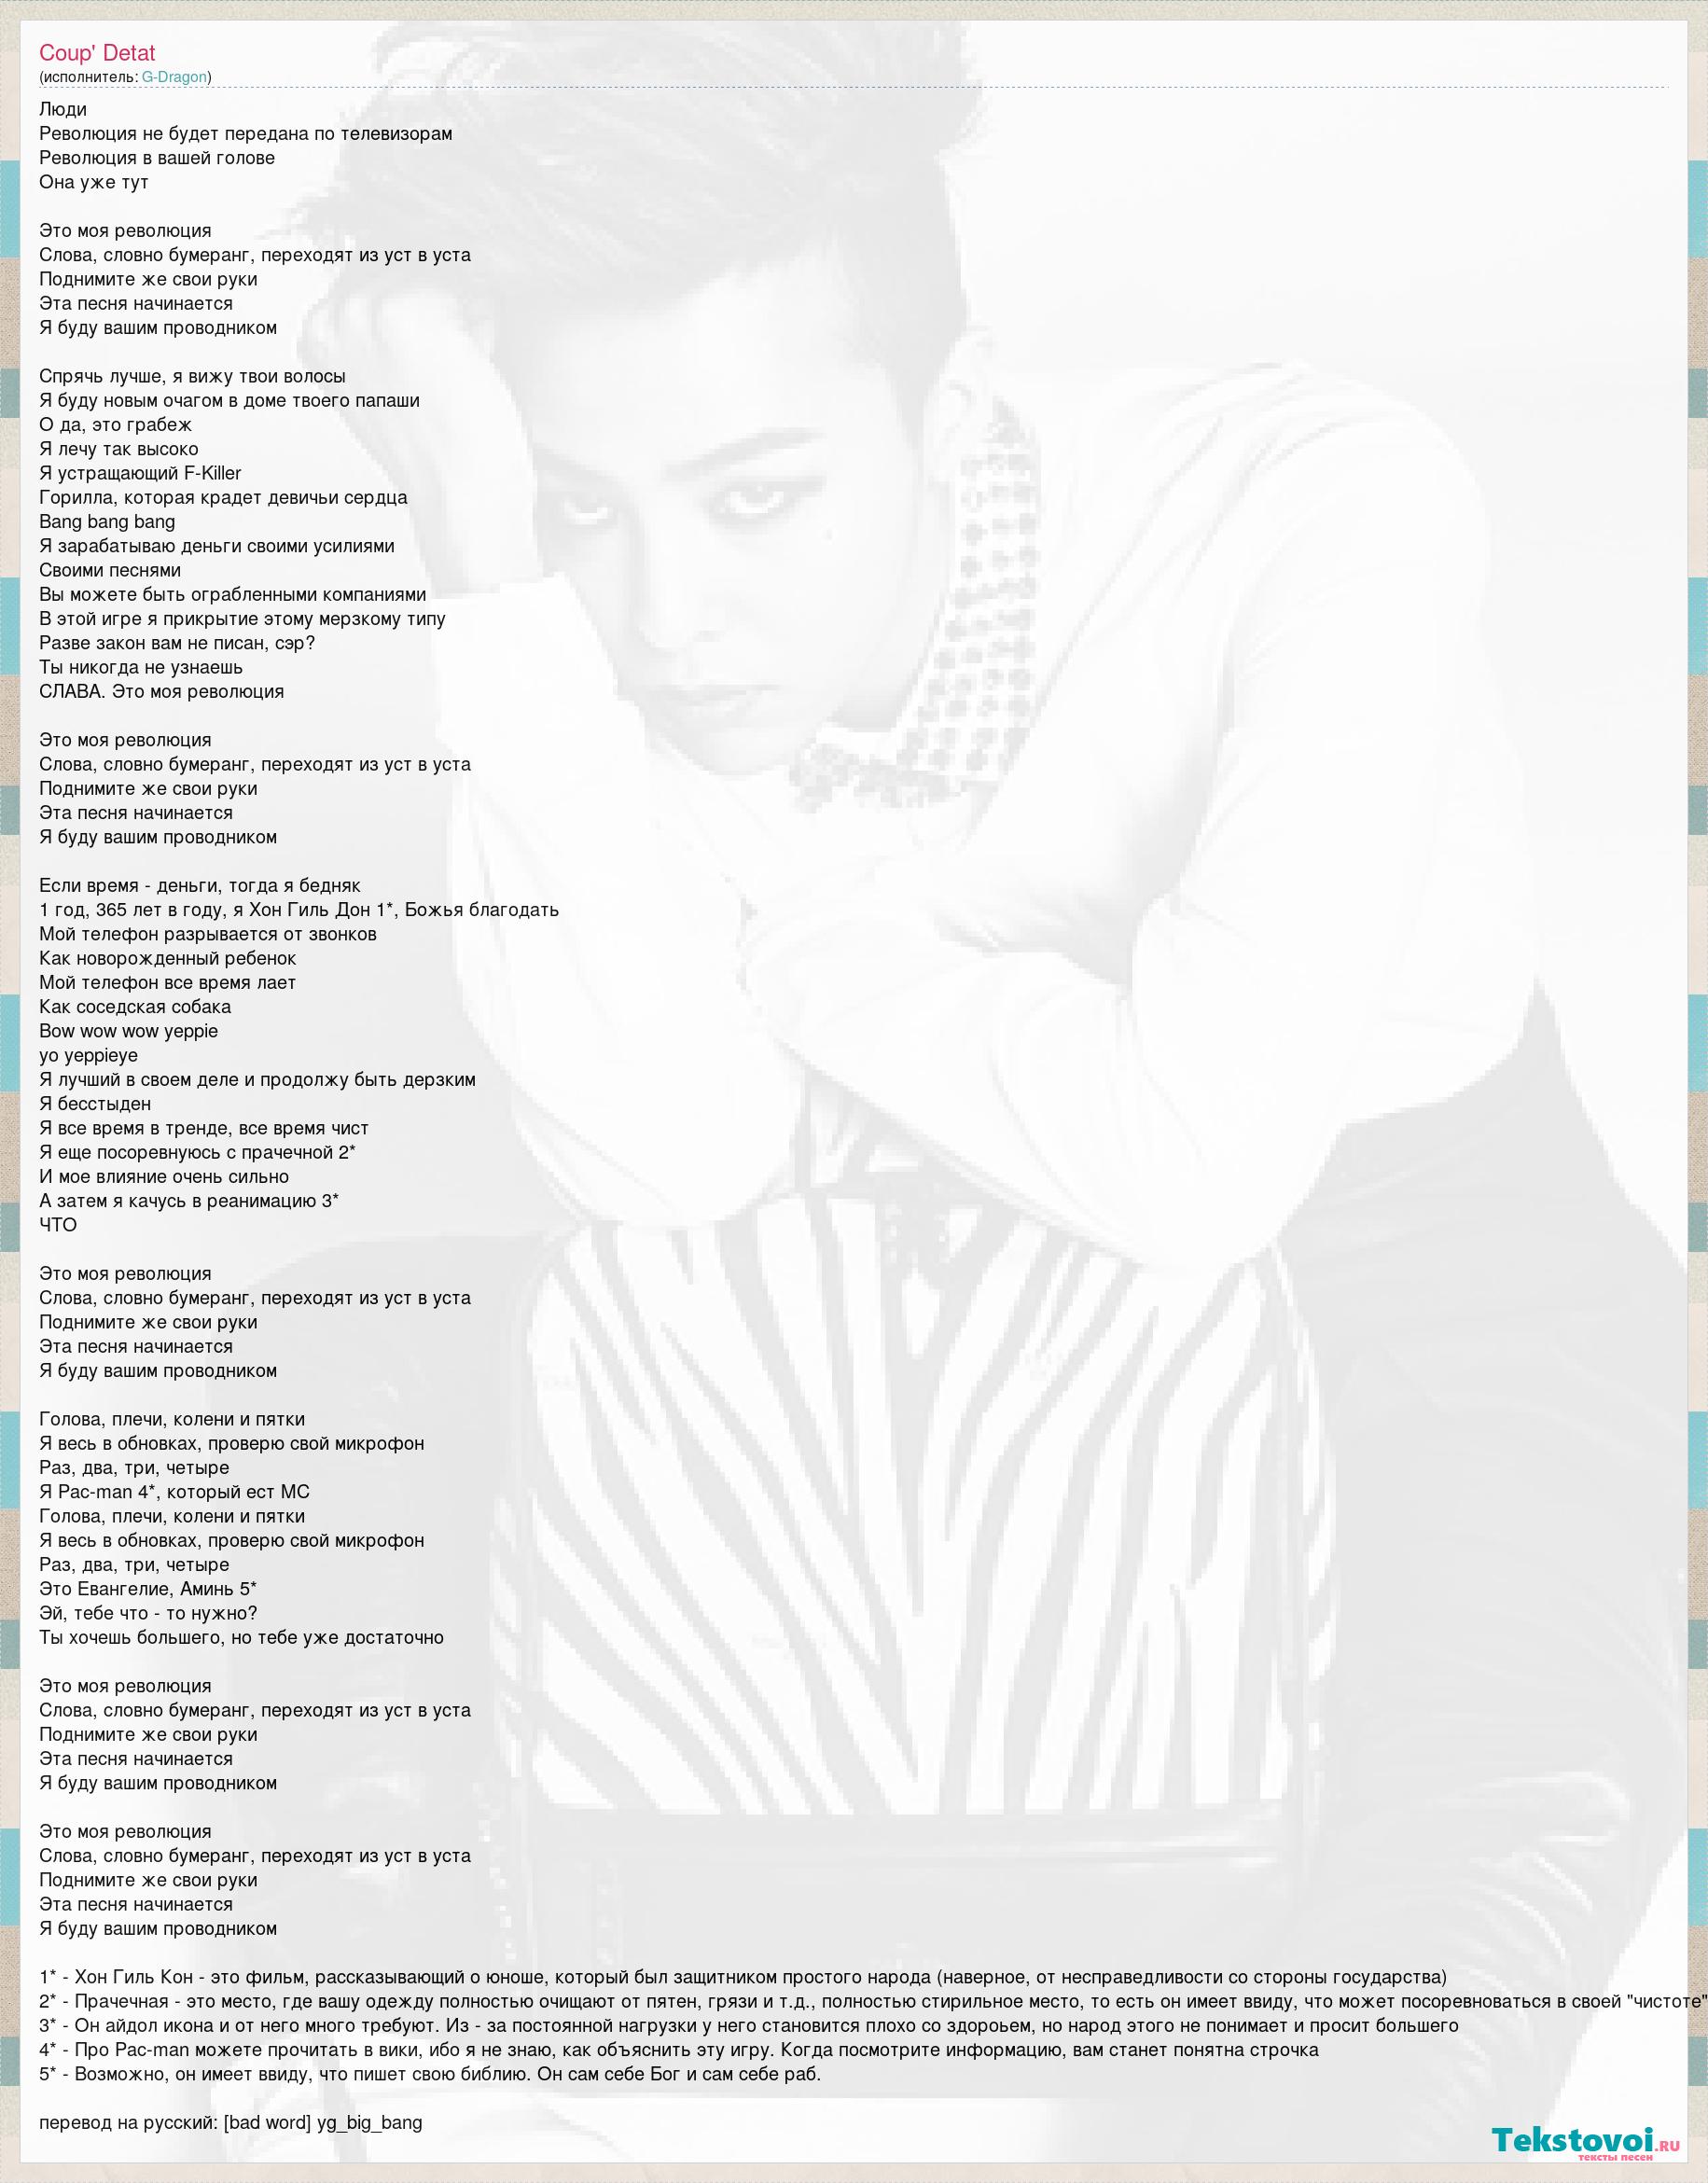 G-Dragon: Detat песни